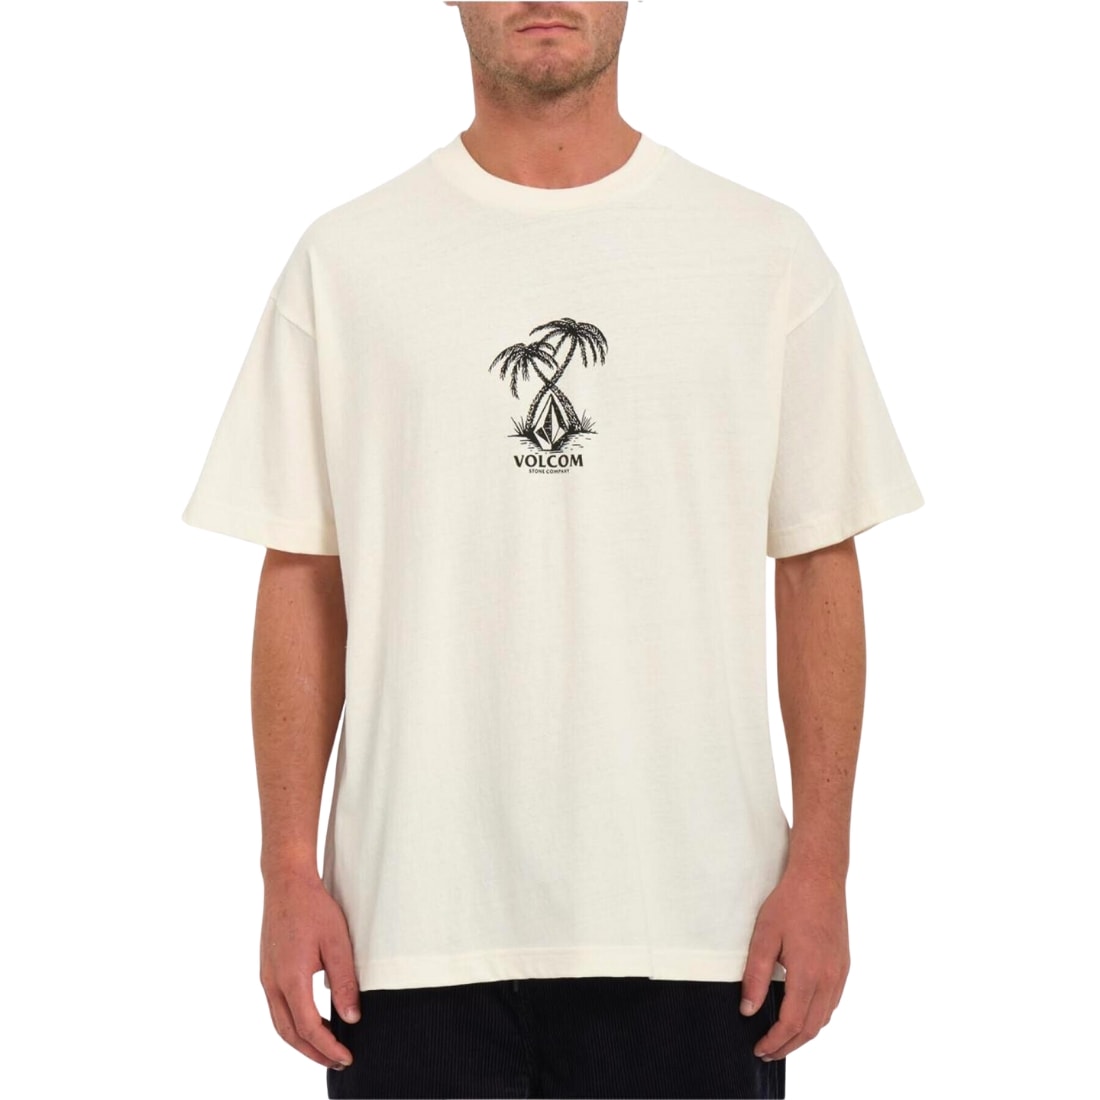 Volcom Crosspalm Loose T-Shirt - Dirty White - Mens Graphic T-Shirt by Volcom